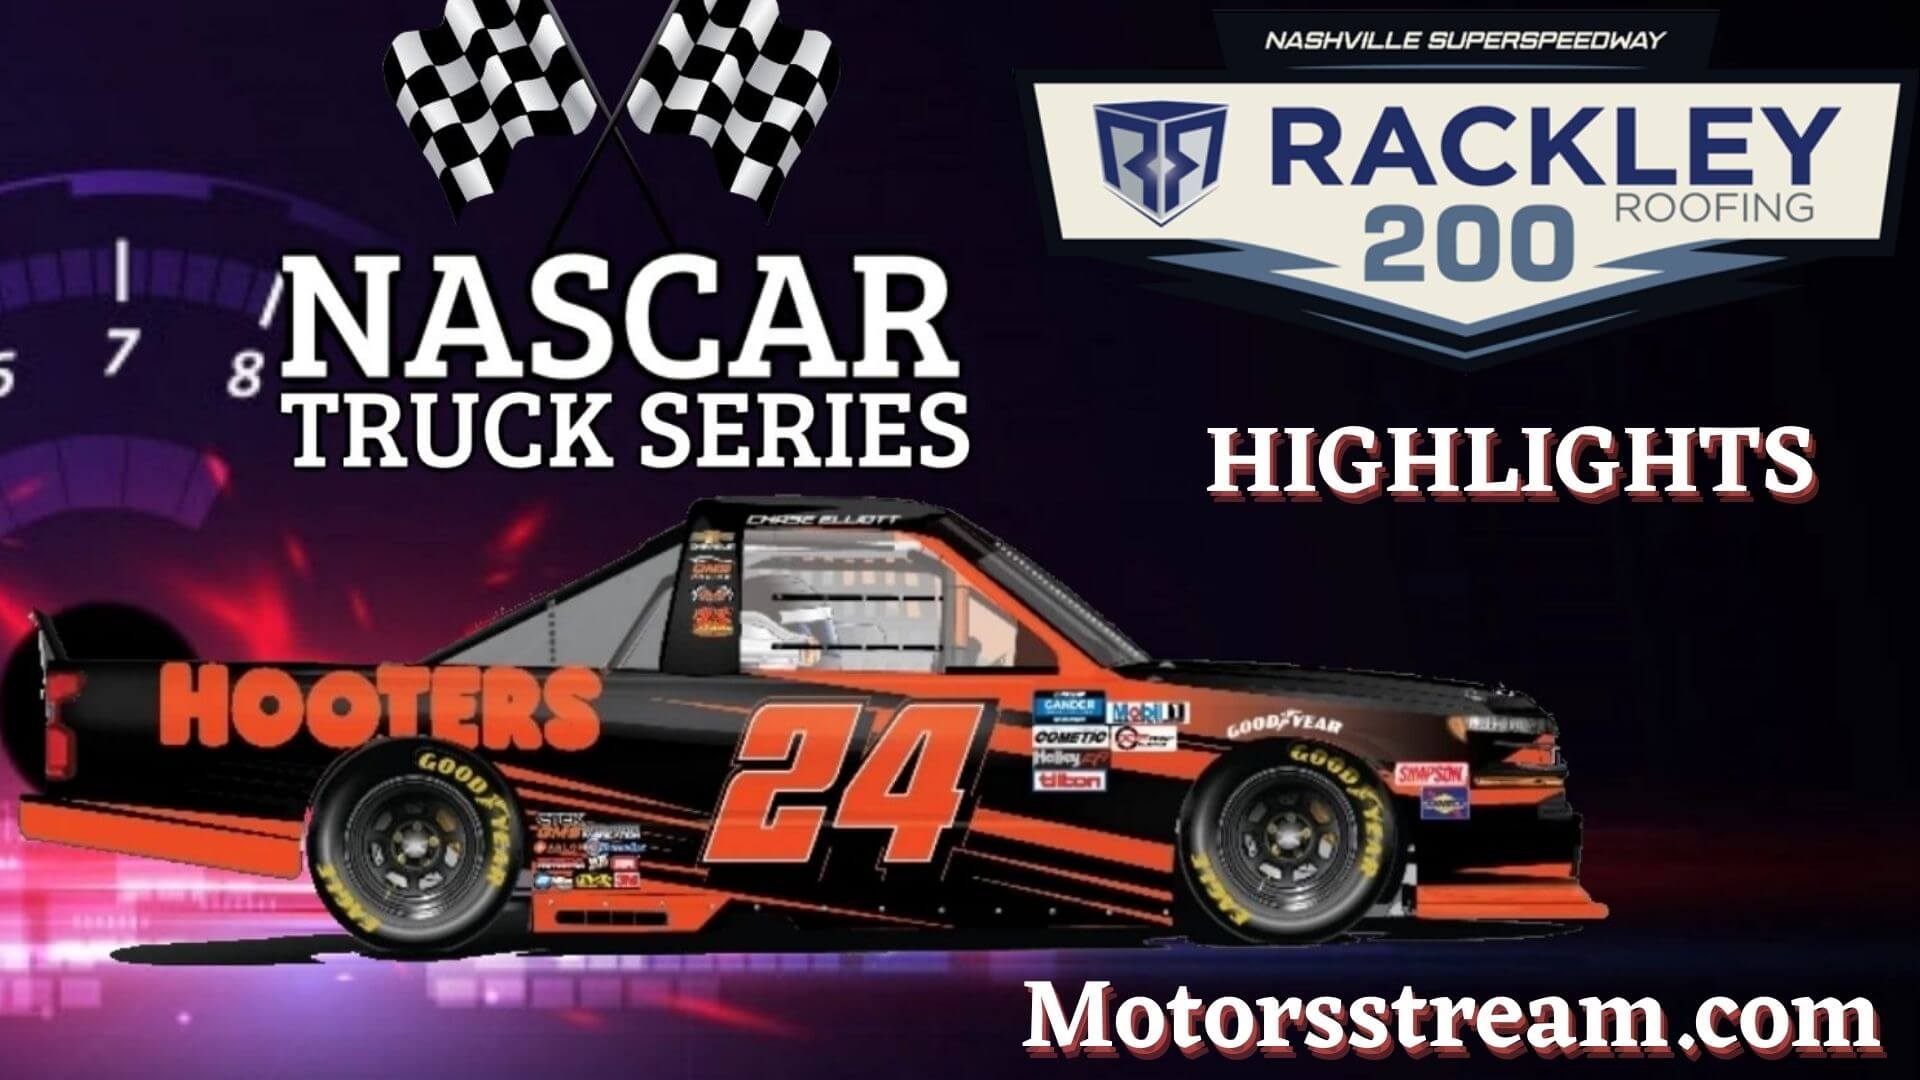 NASCAR Rackley Roofing 200 Highlights 2021 Truck